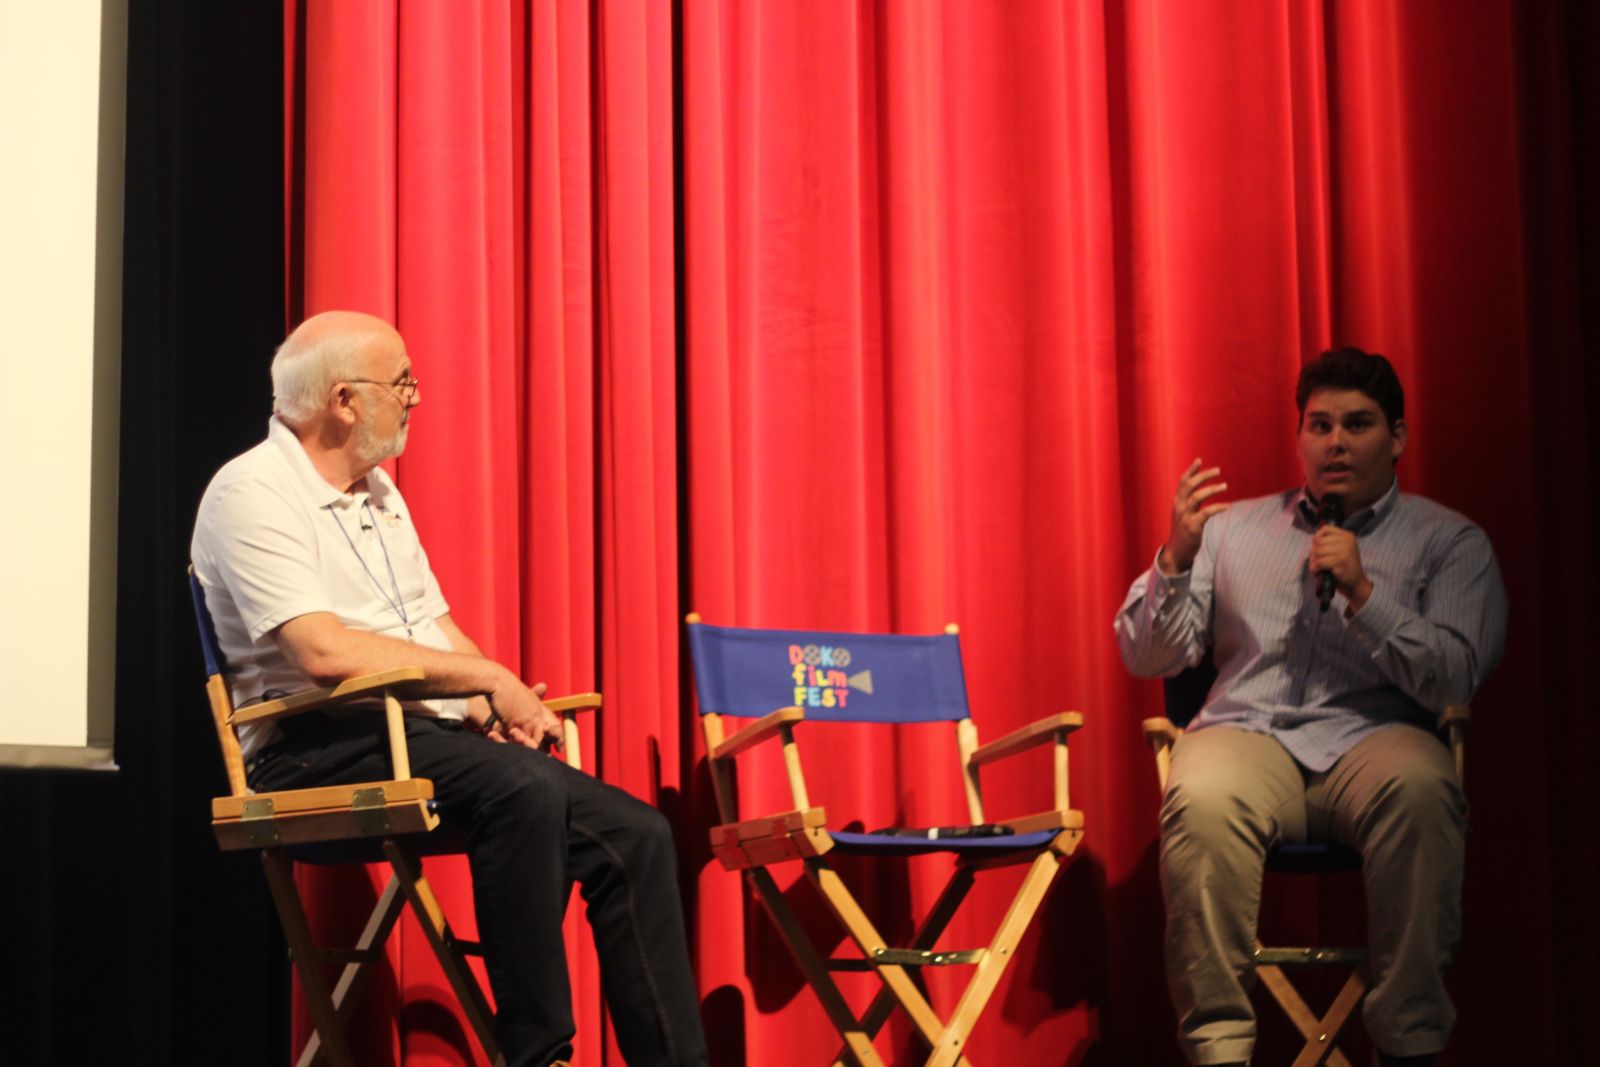 Luke Evans (right), winner of the Best Short Film category, talks with Doko Film Fest founder Ray Smith. (Photo/Christina Lee Knauss)